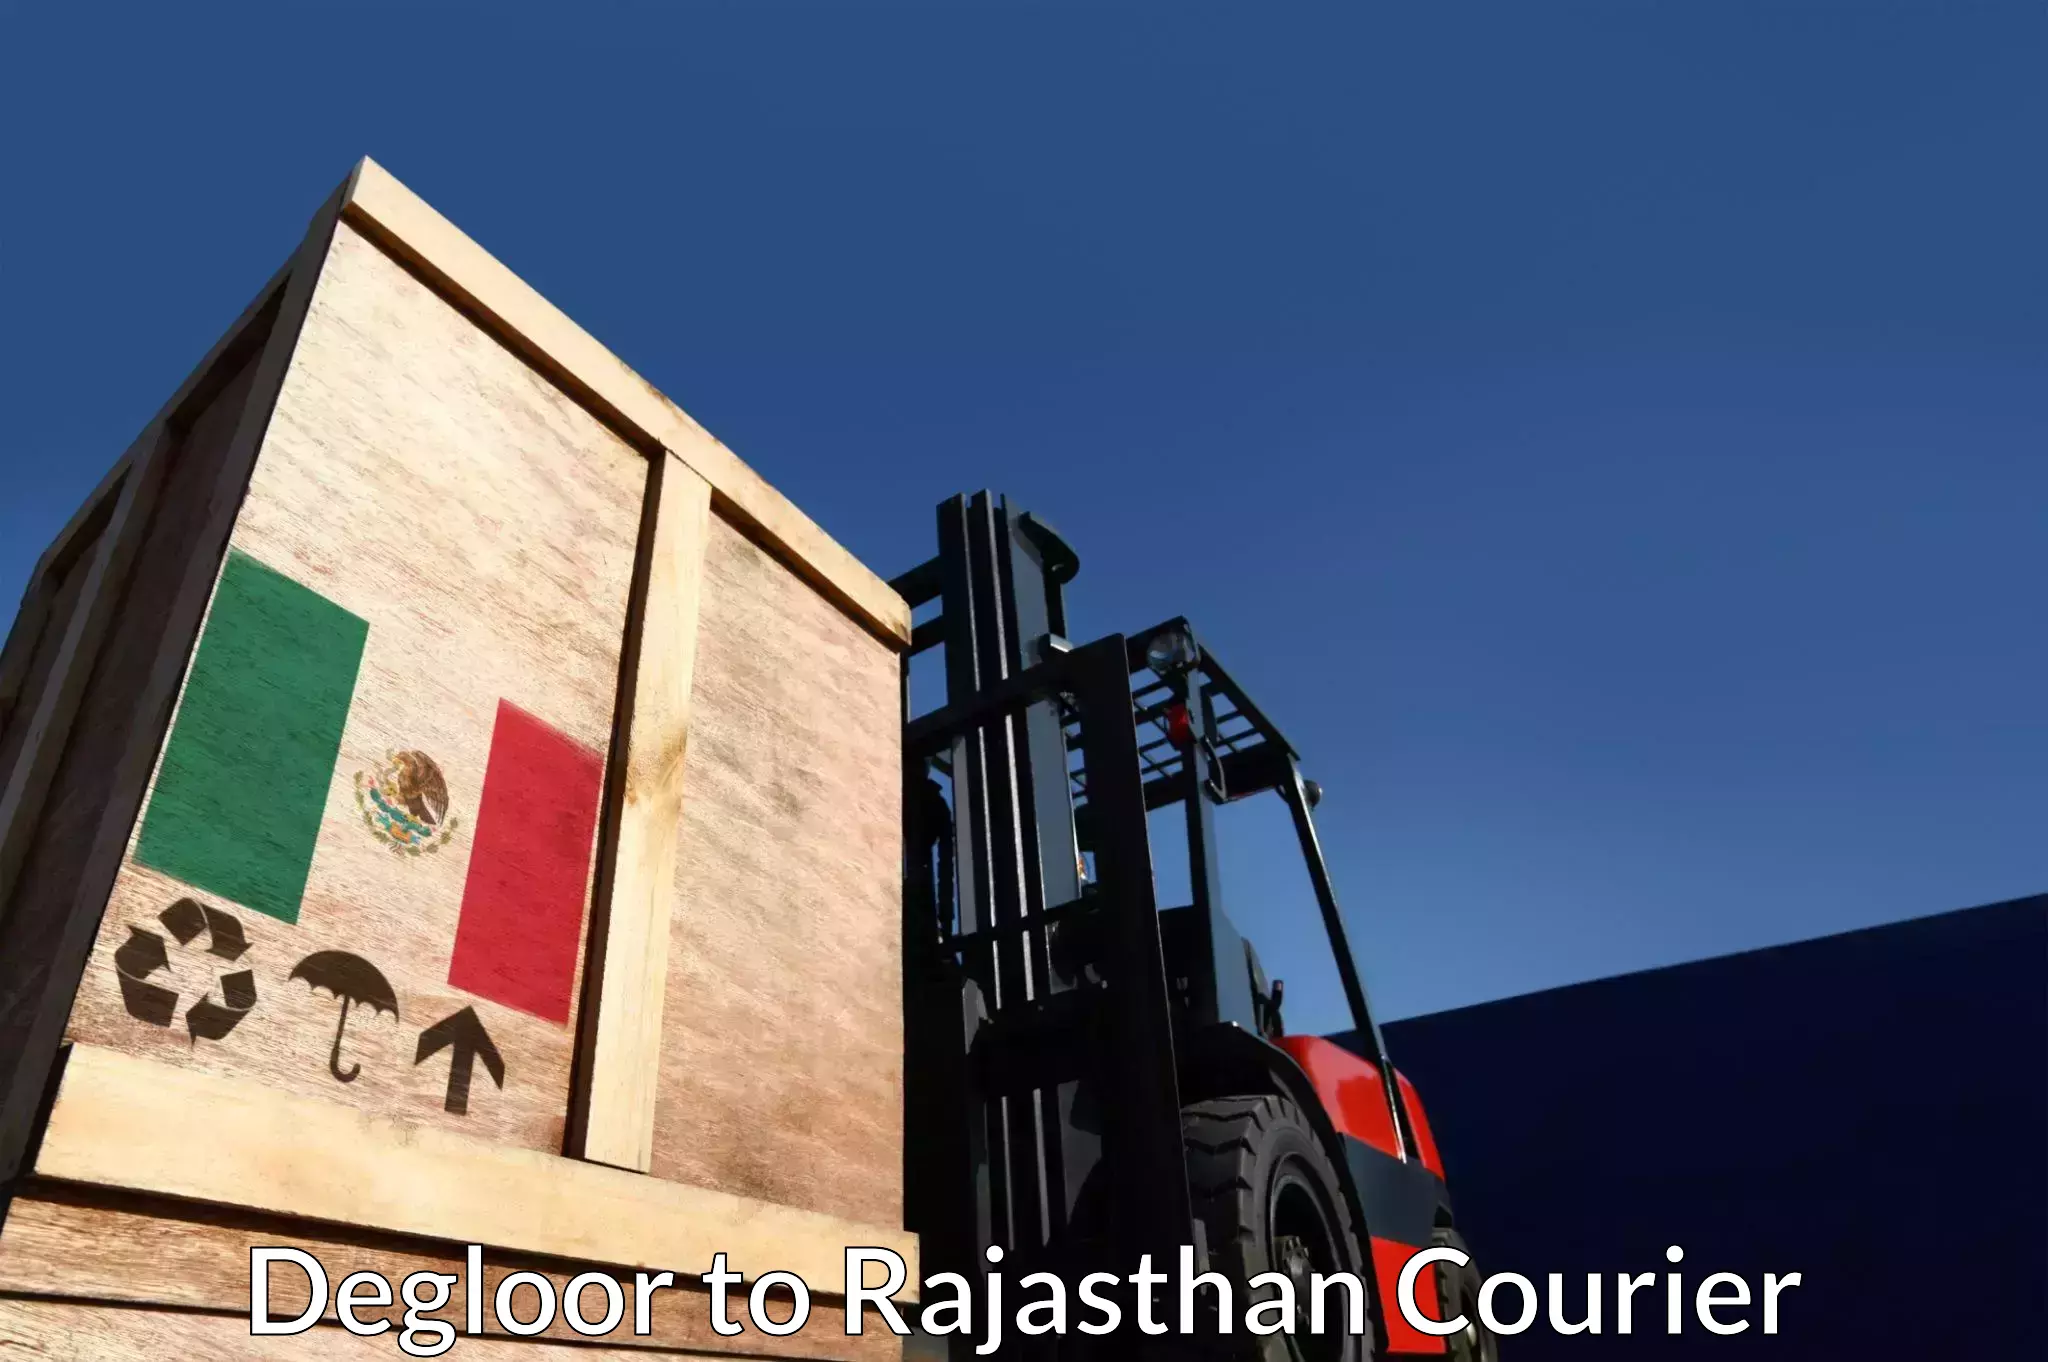 Smart logistics strategies in Degloor to Rajasthan